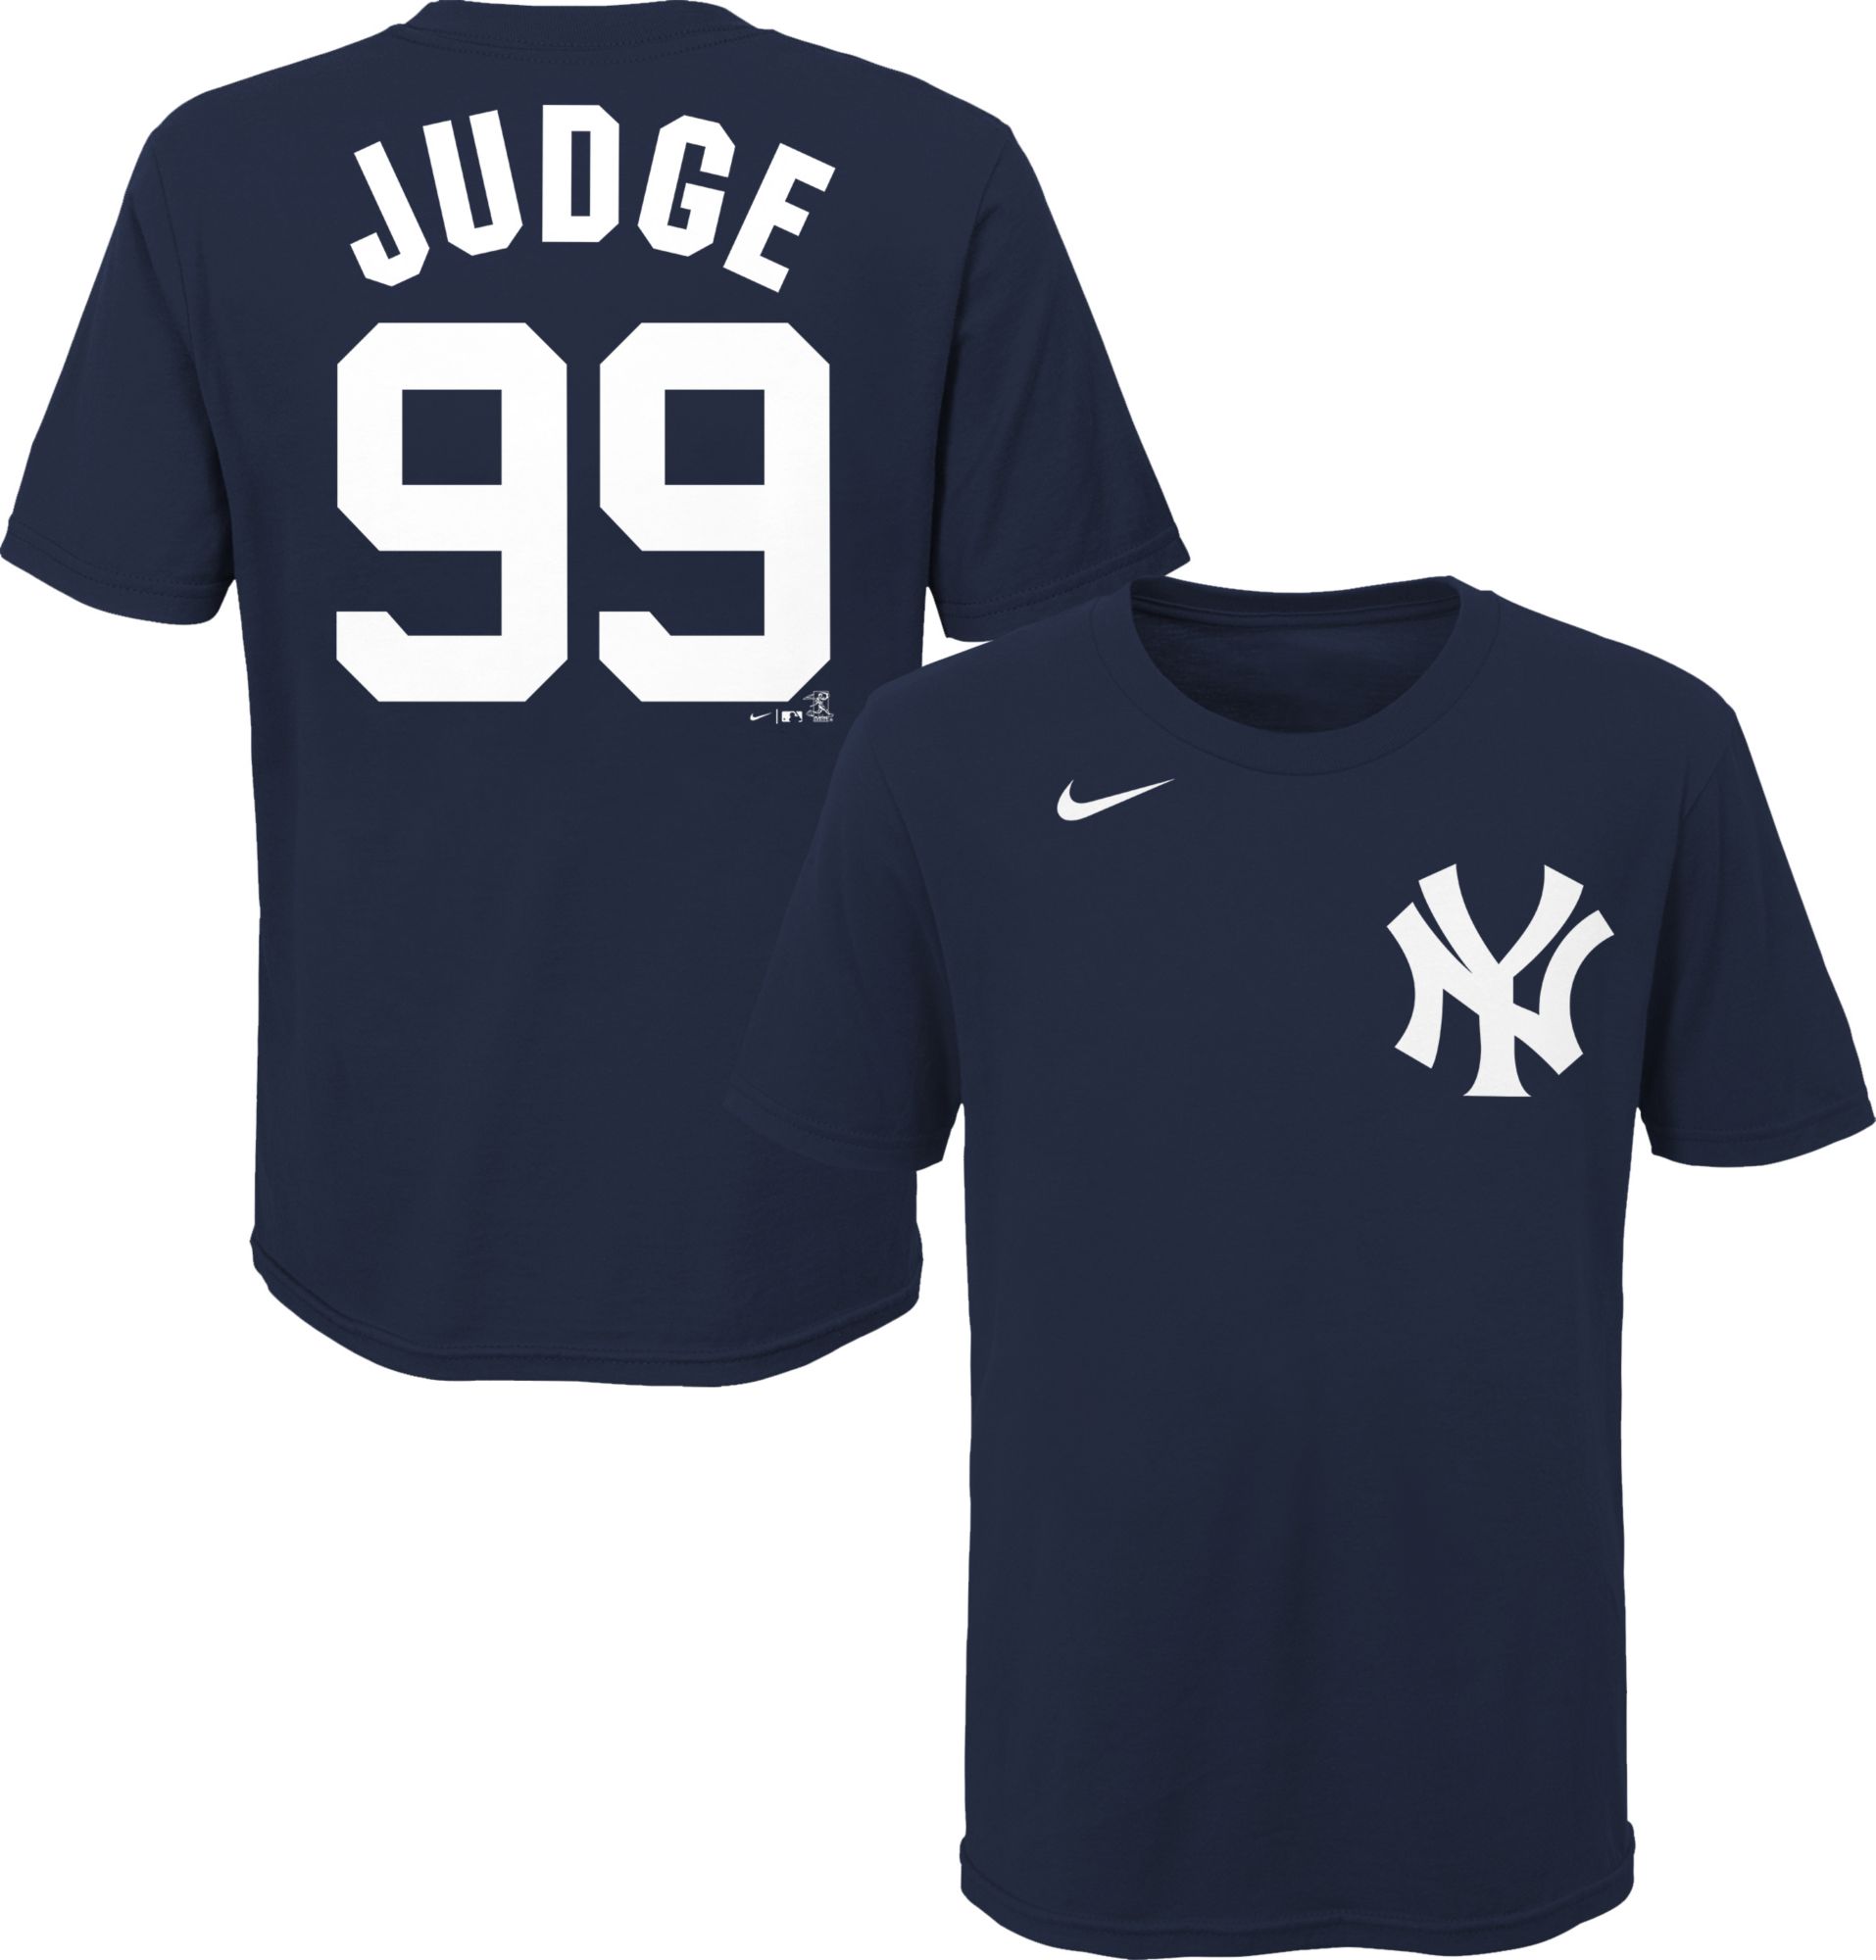 99 judge jersey